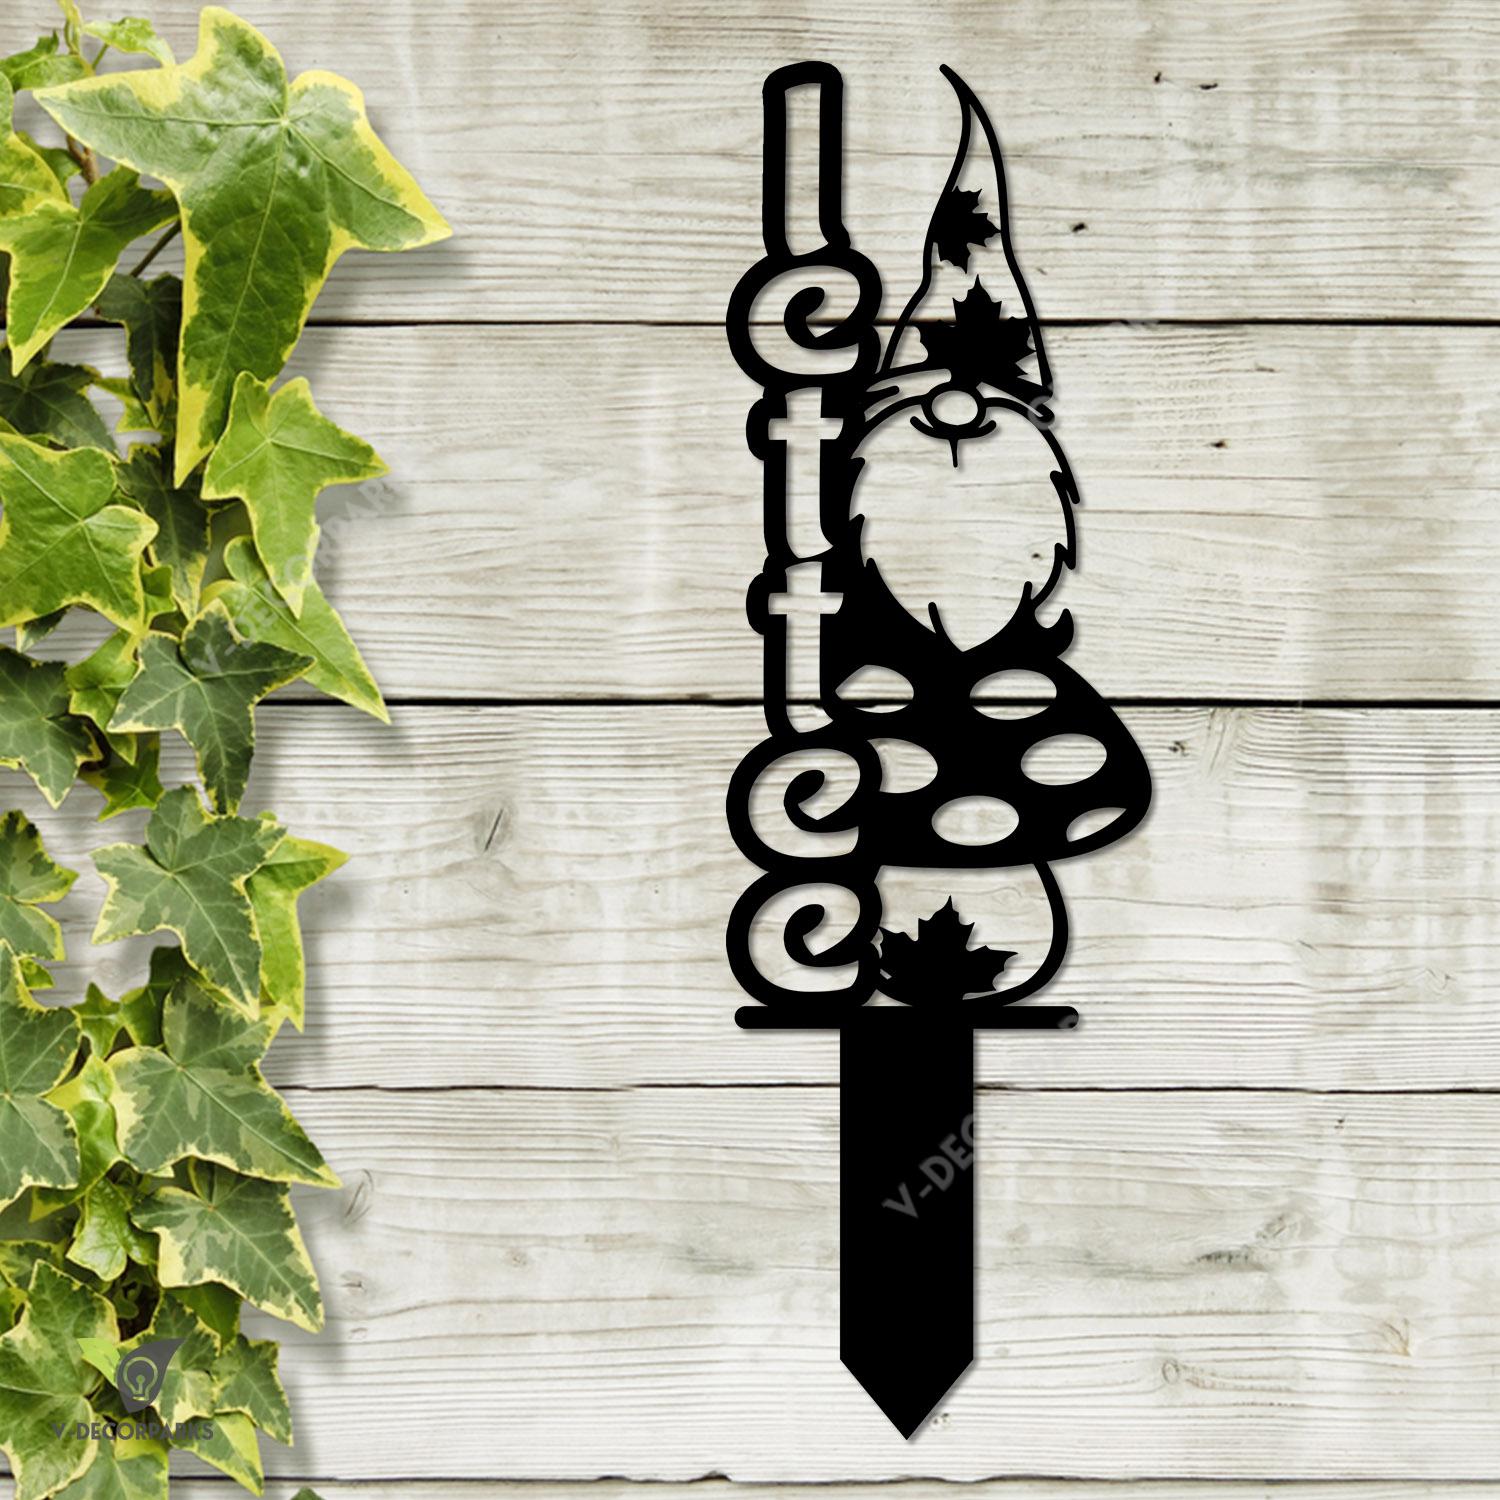 Lettee Gnome And Mushroom Metal Garden Art, Lettee Mushroom Vegetables Markers Stainless Stake Metal Sign